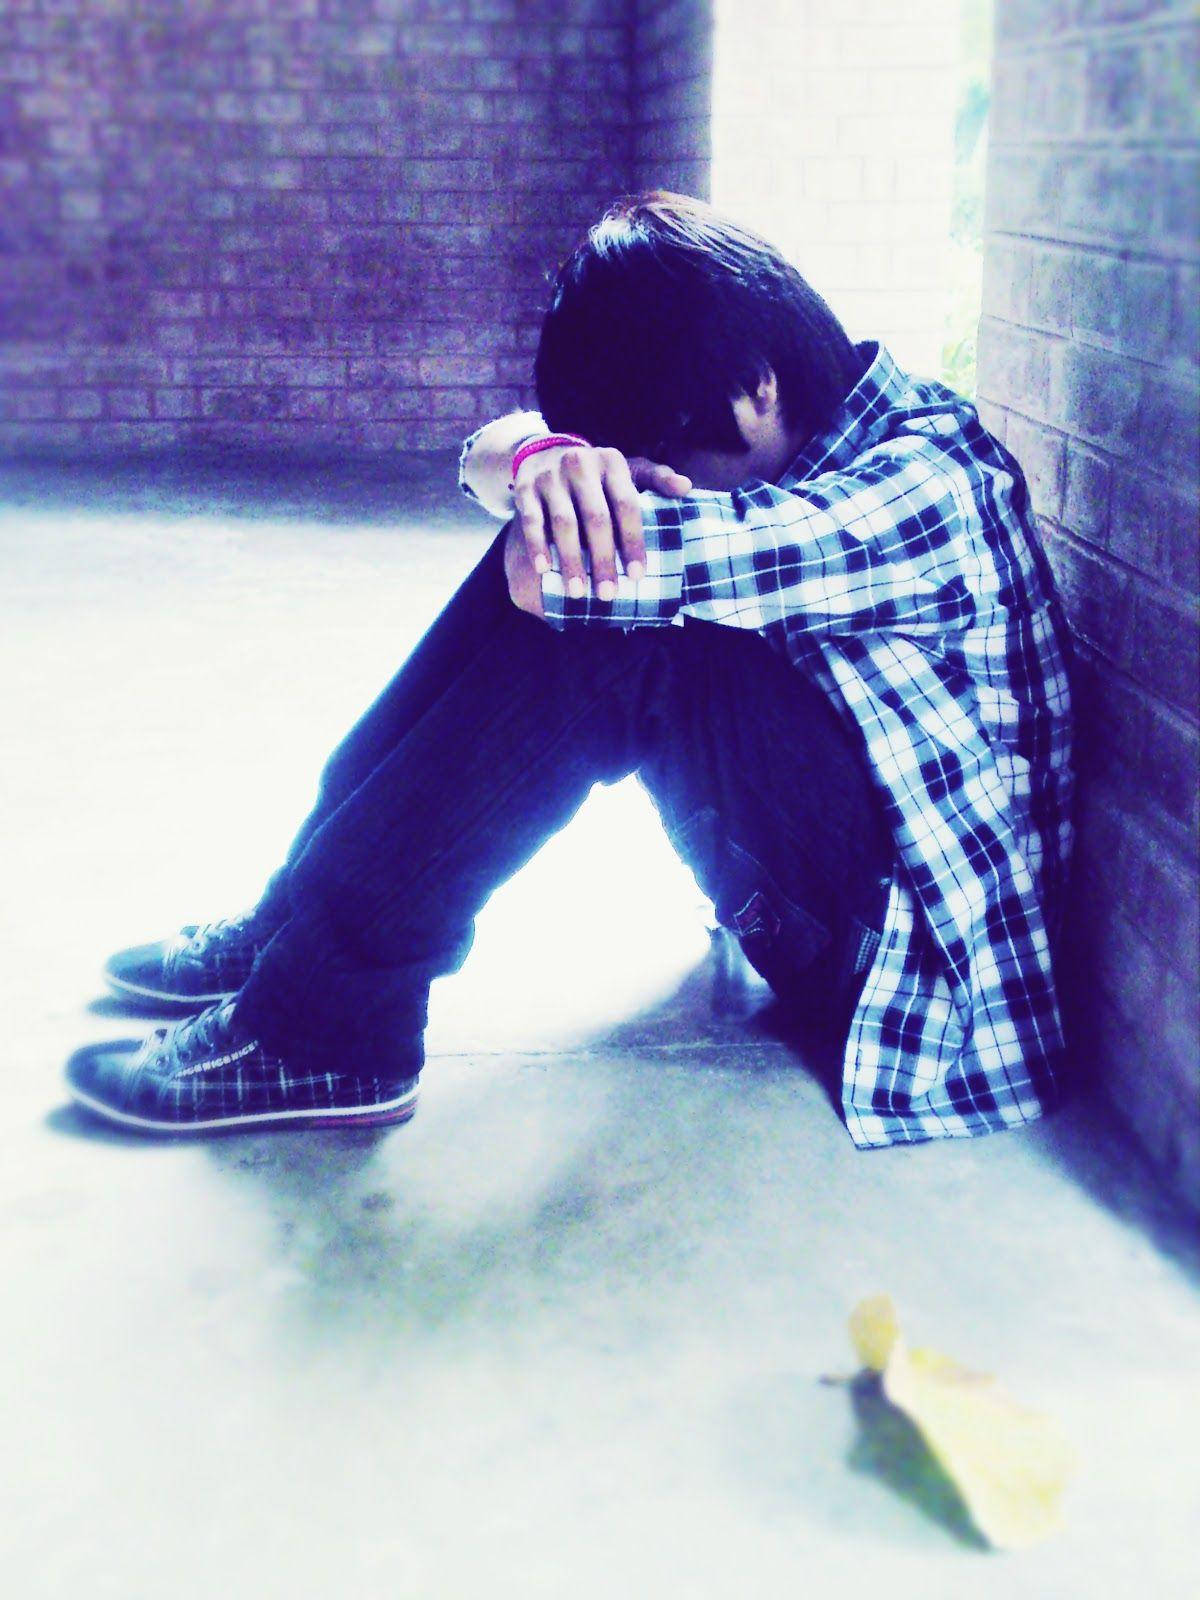 Alone Boy In Gloomy Image Background